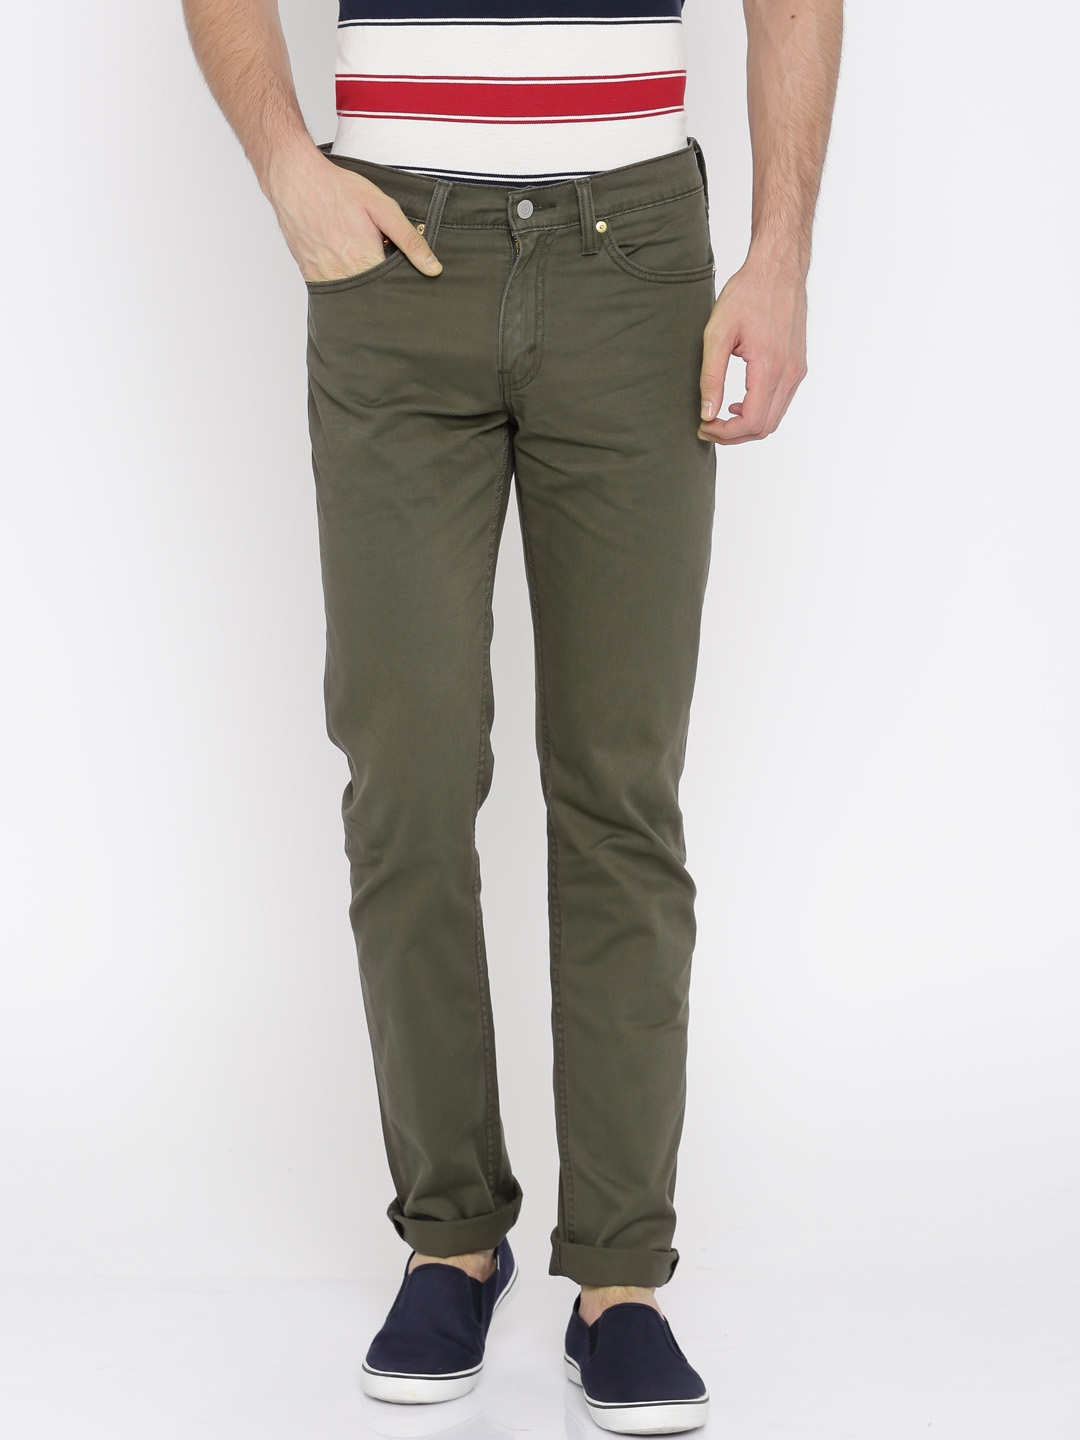 Introducir 31+ imagen levi’s olive jeans